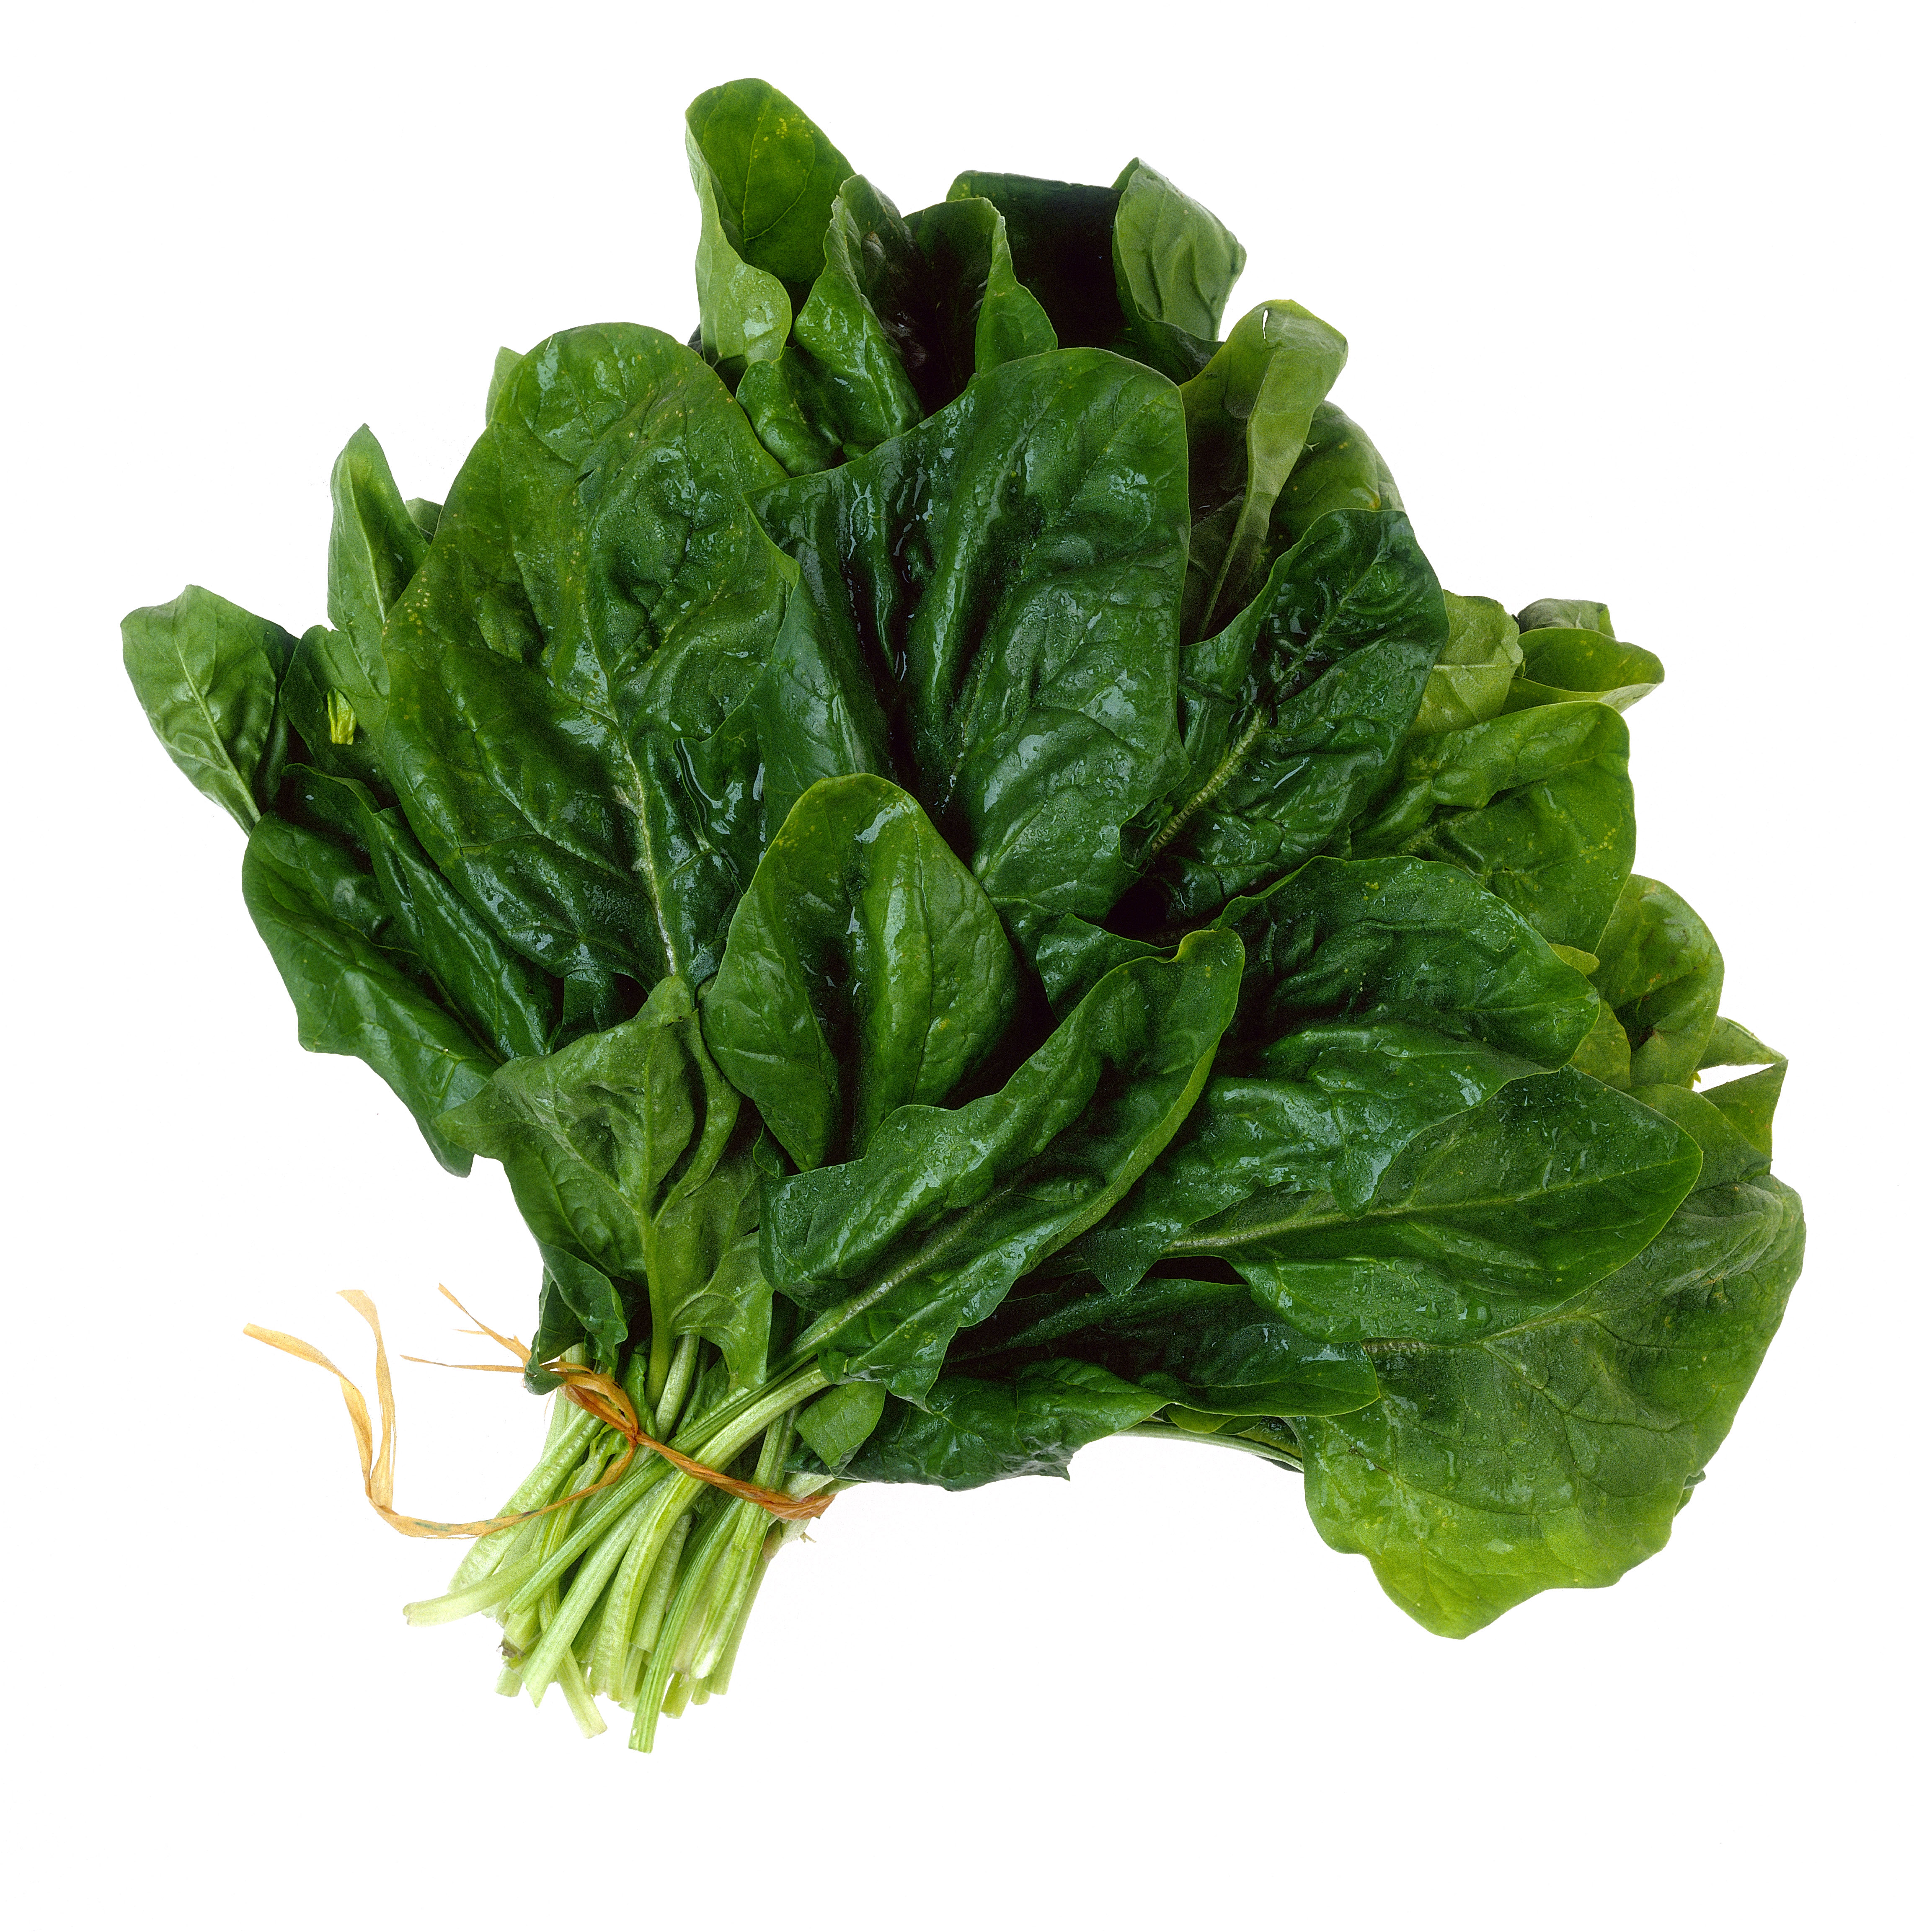 green leafy vegetables